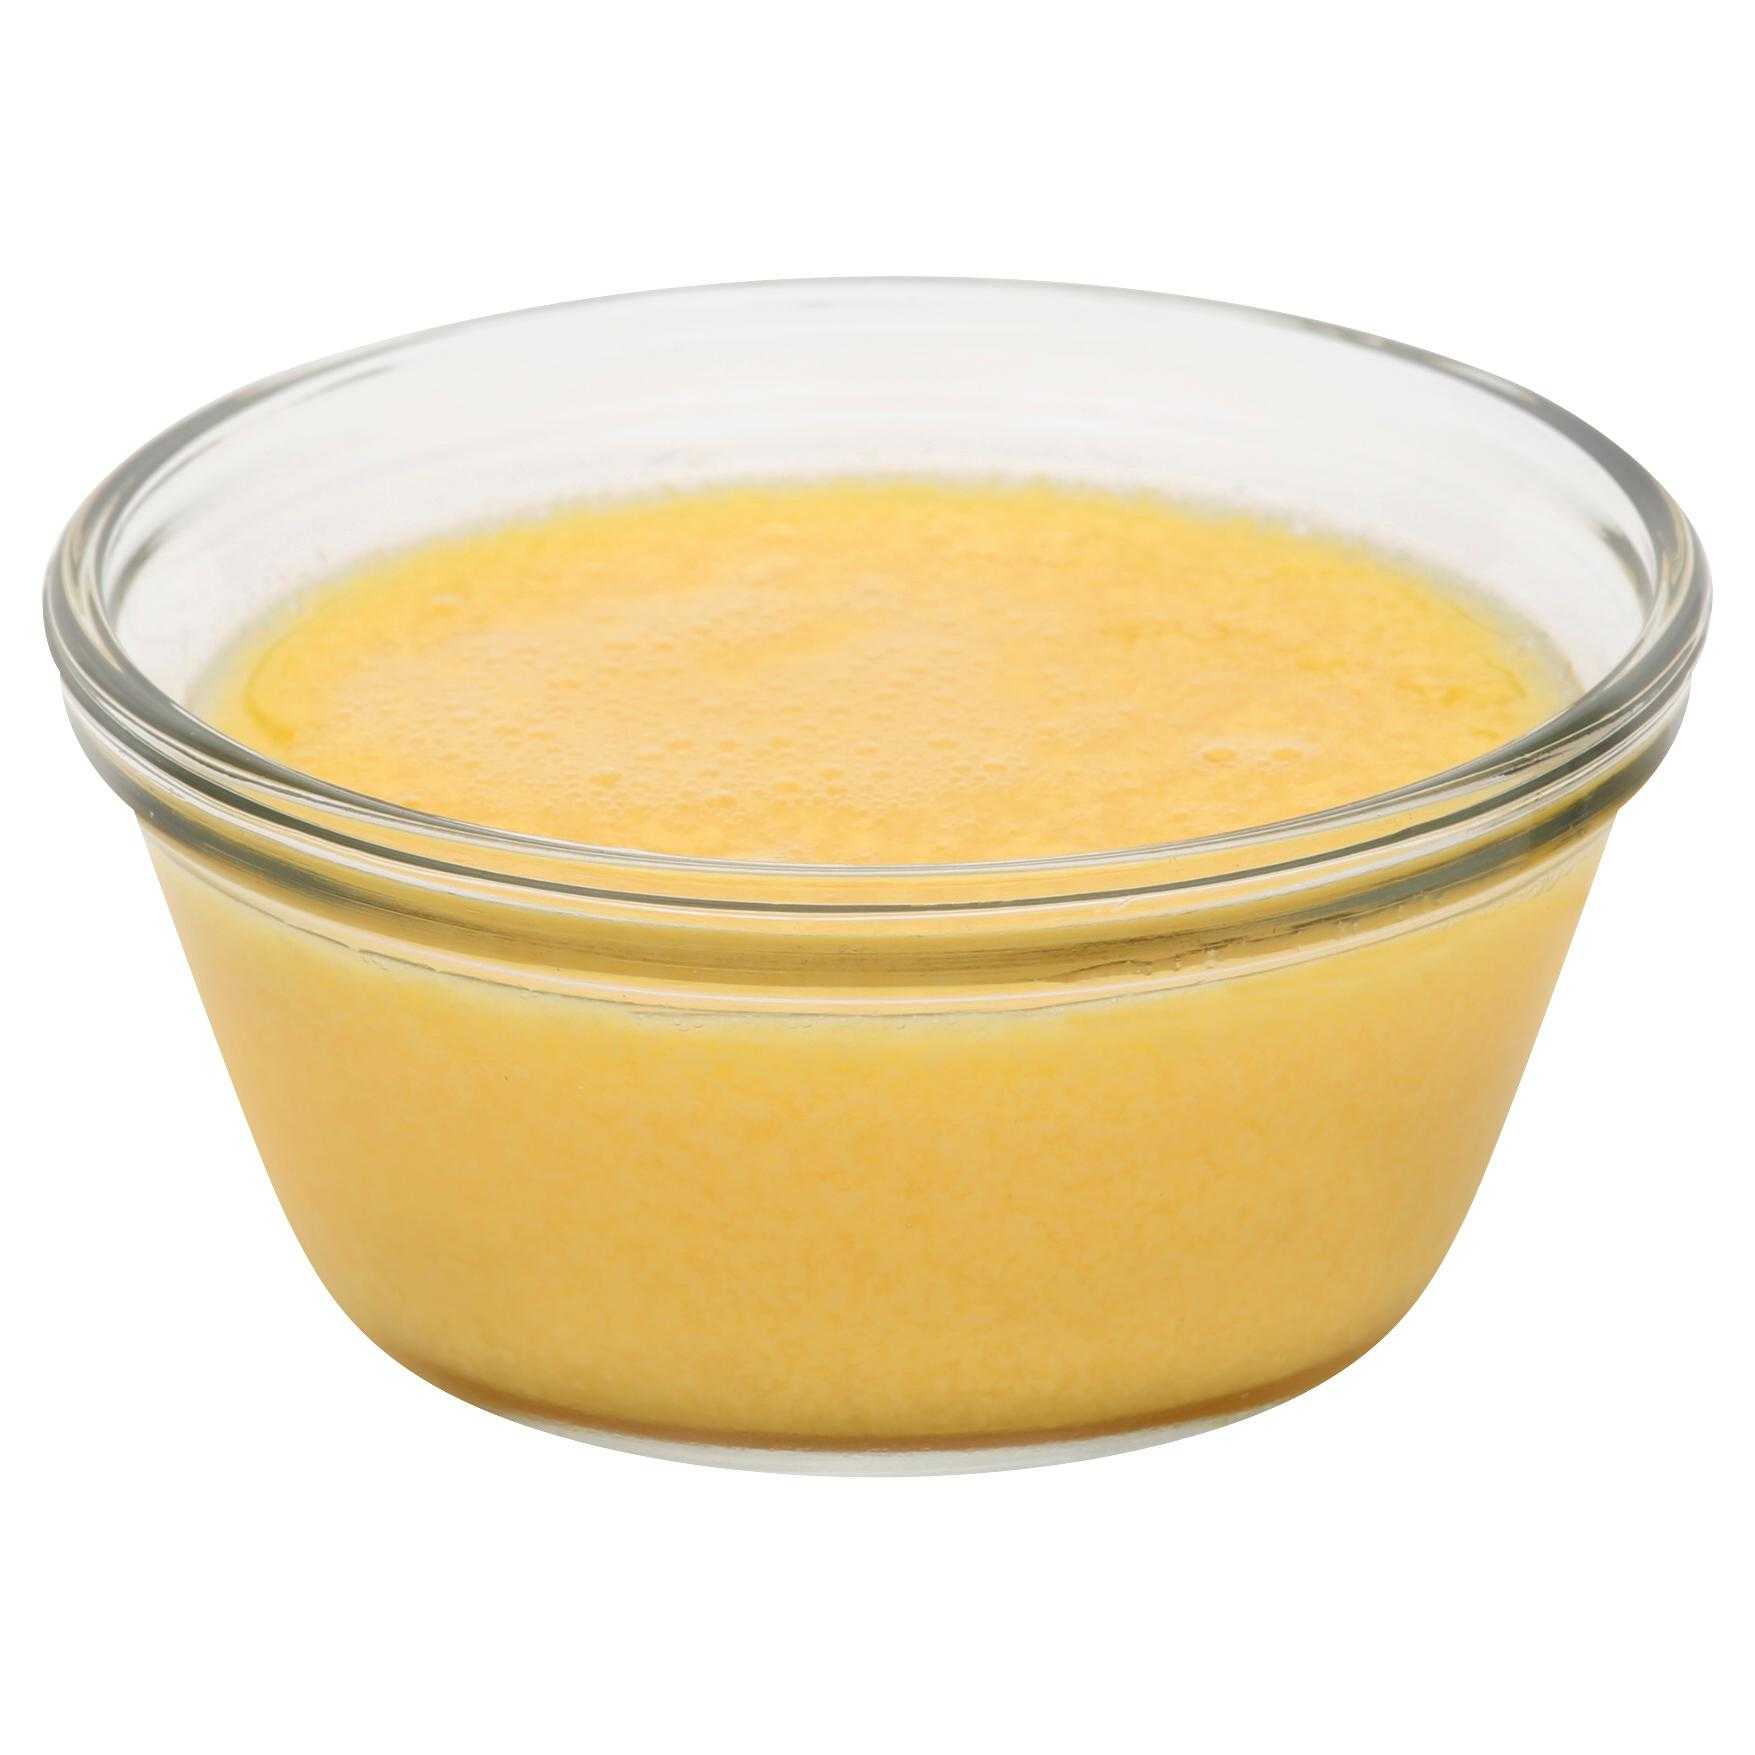 Abbotsford Farms® American Humane Certified Cage Free Liquid Breakfast Blend Scrambled Egg Mix, 2/20 Lb Bag